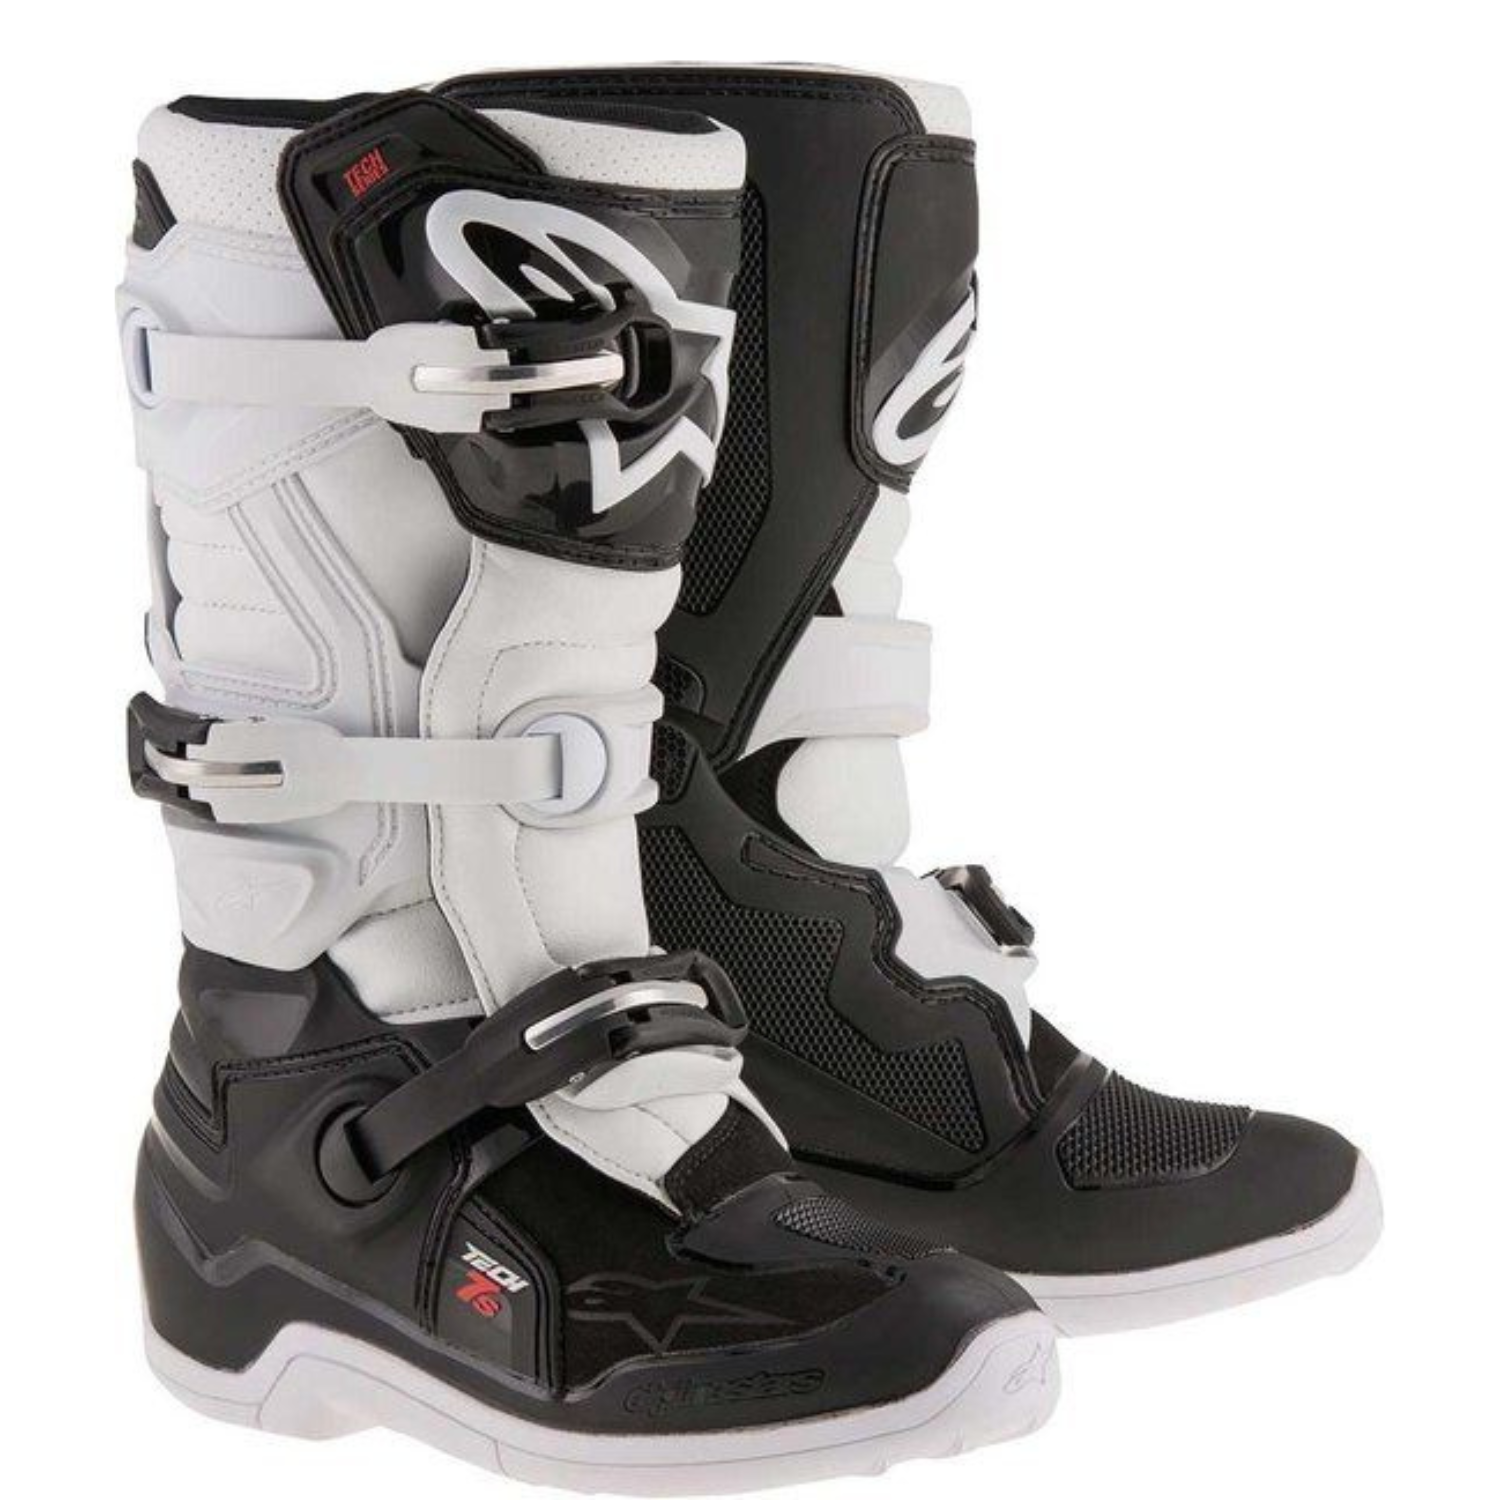 Image of Alpinestars Tech 7 S Black White Boots Größe US 5